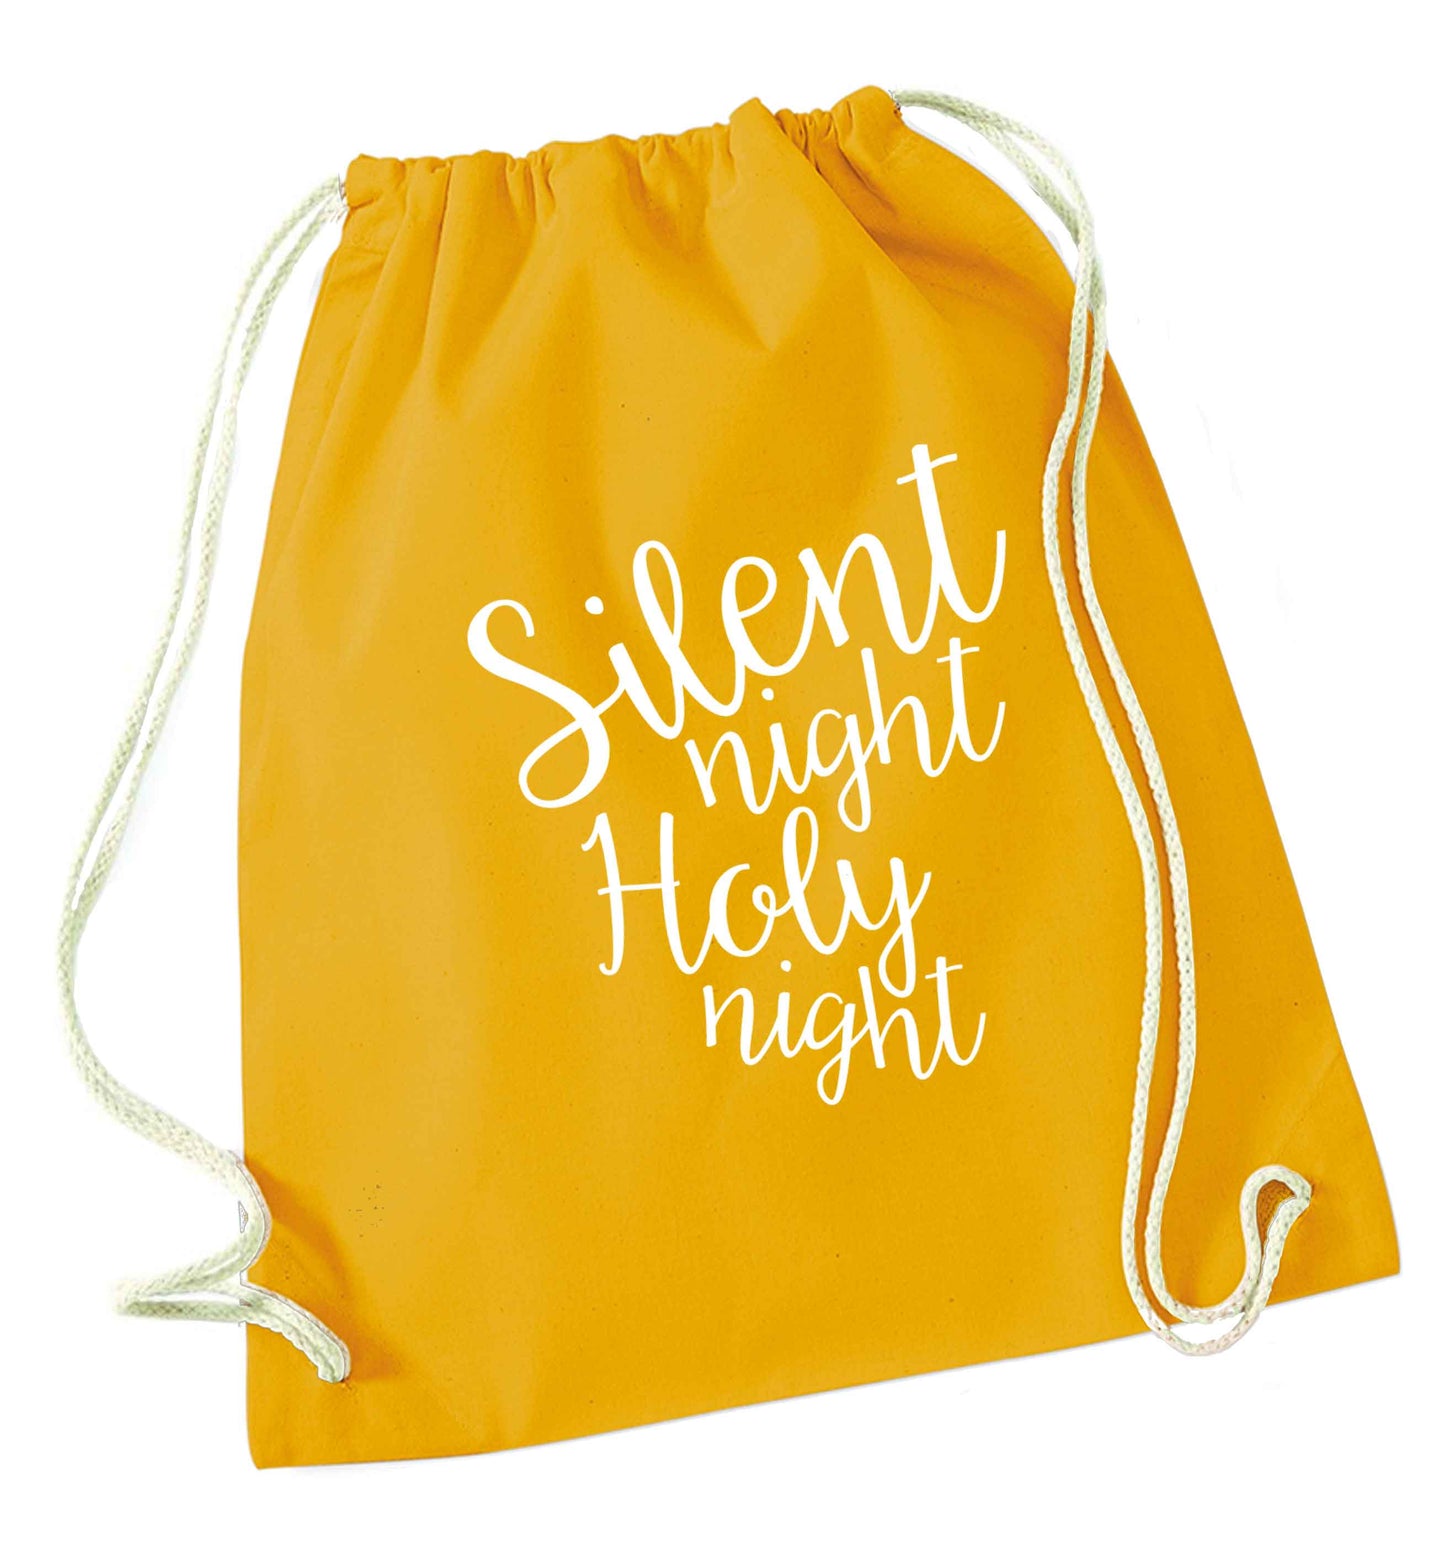 Silent night holy night mustard drawstring bag